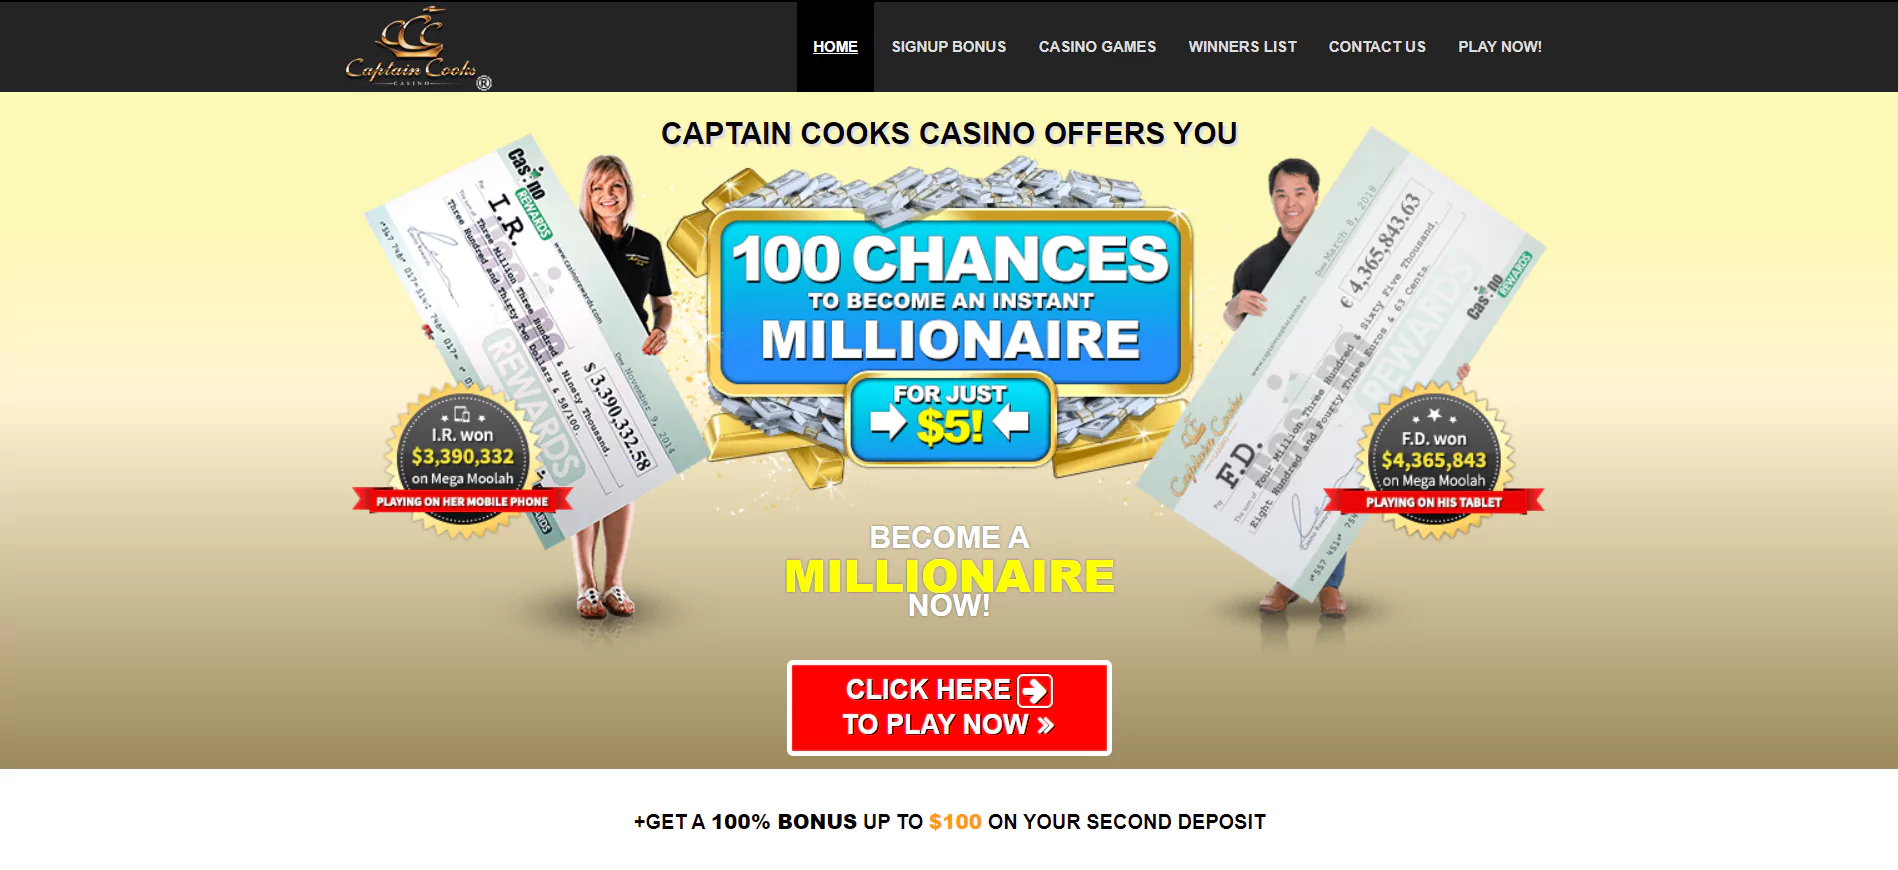 Screenshot ofBest Online Casino with $5 Minimum Deposit- Capitan Cook